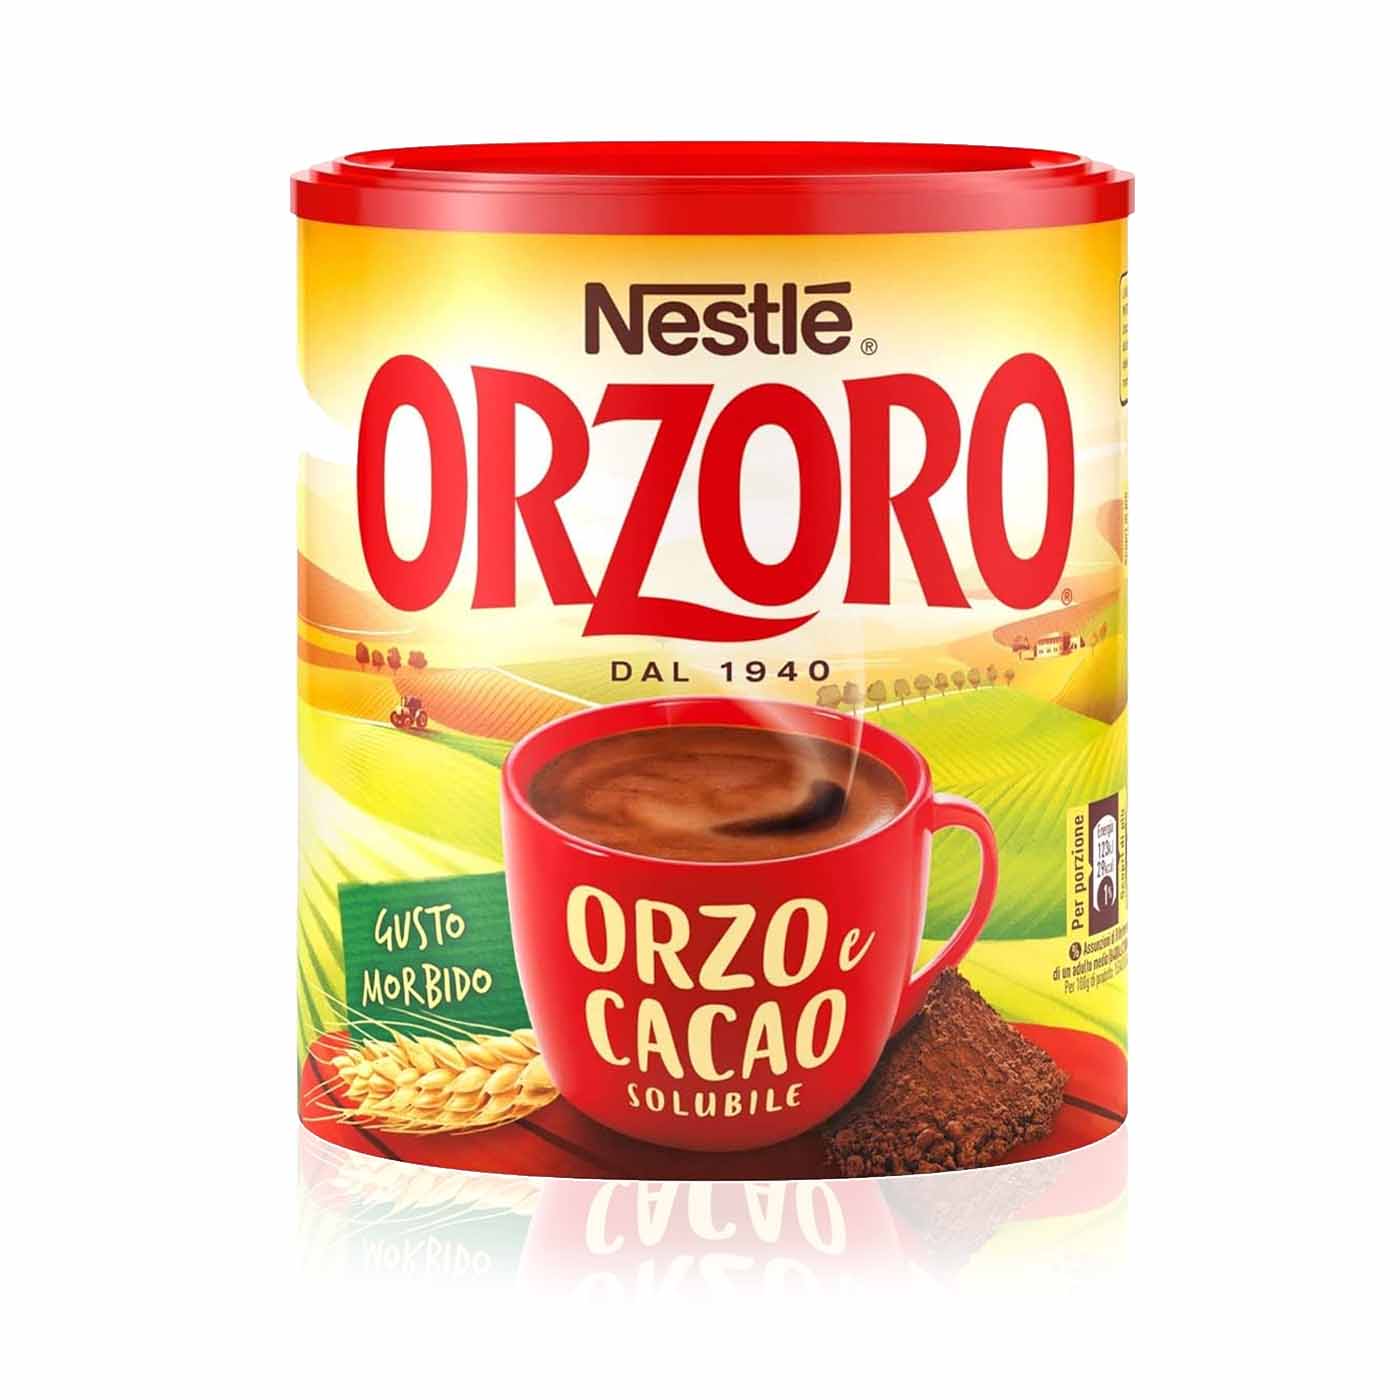 NESTLÈ Orzoro Orzo e Cacao - Orzoro Gerste und Kakao löslich - 0,180kg